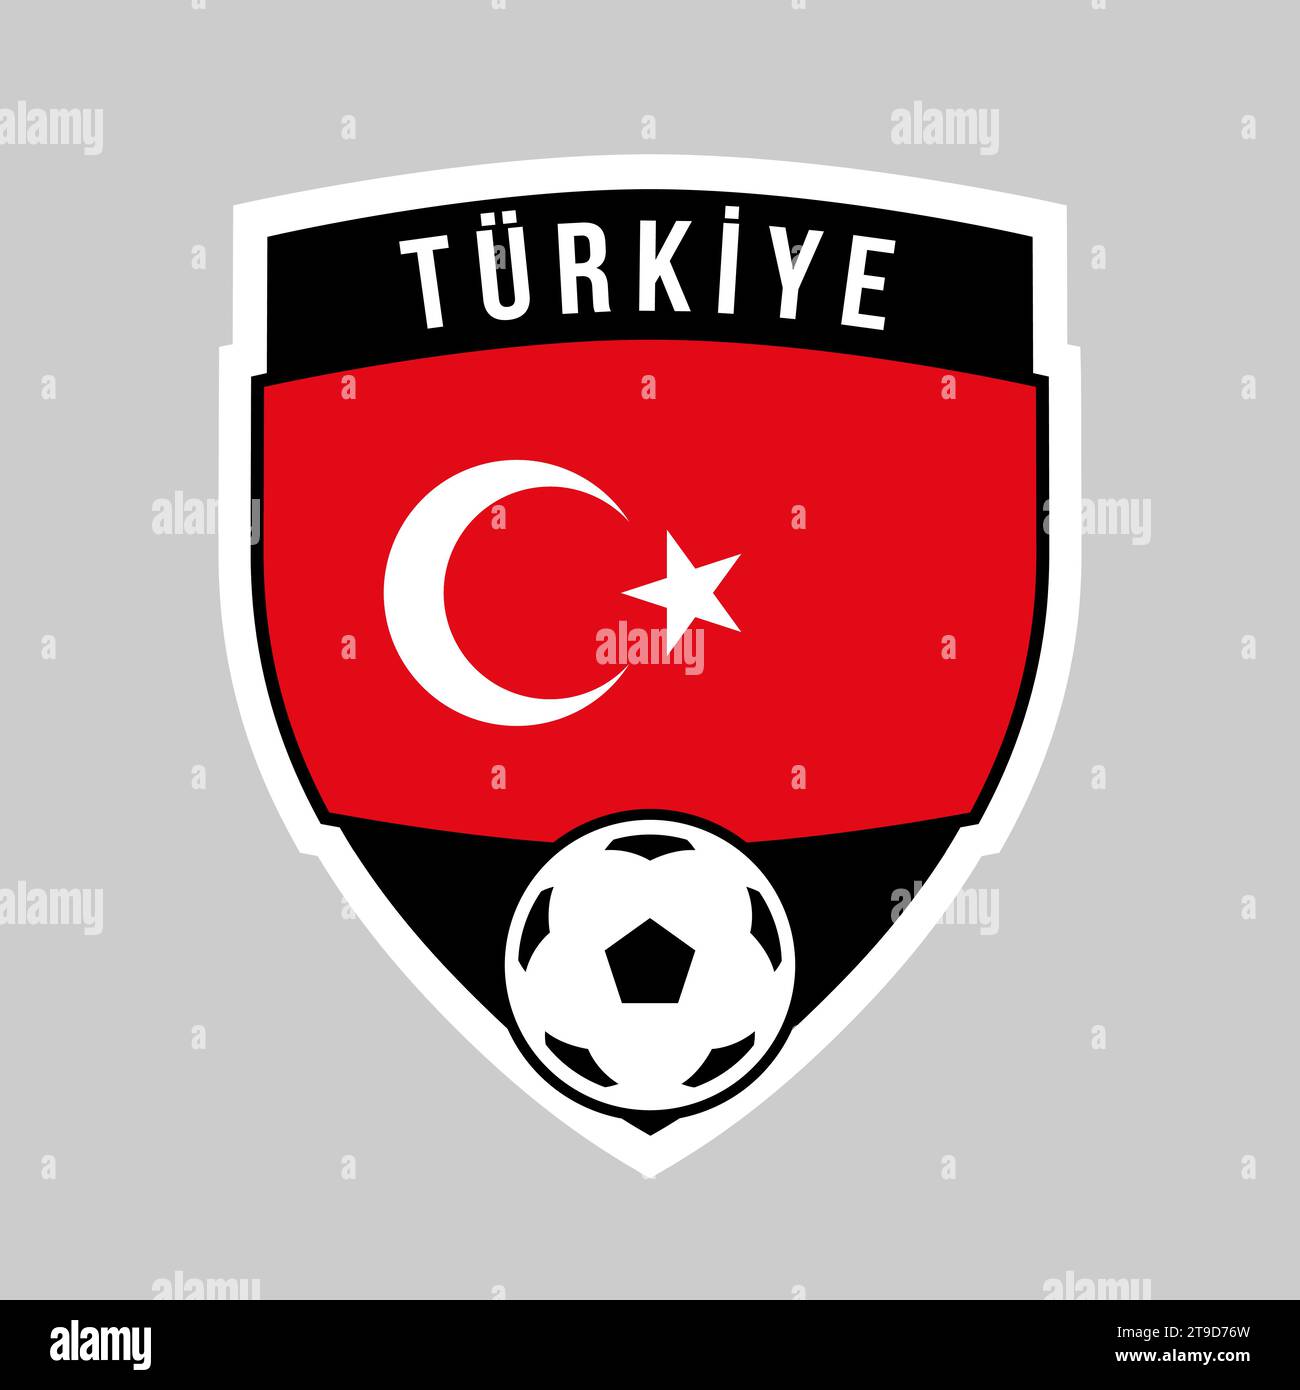 Illustration of Shield Team Badge of Turkiye for Football Tournament Stock Vector